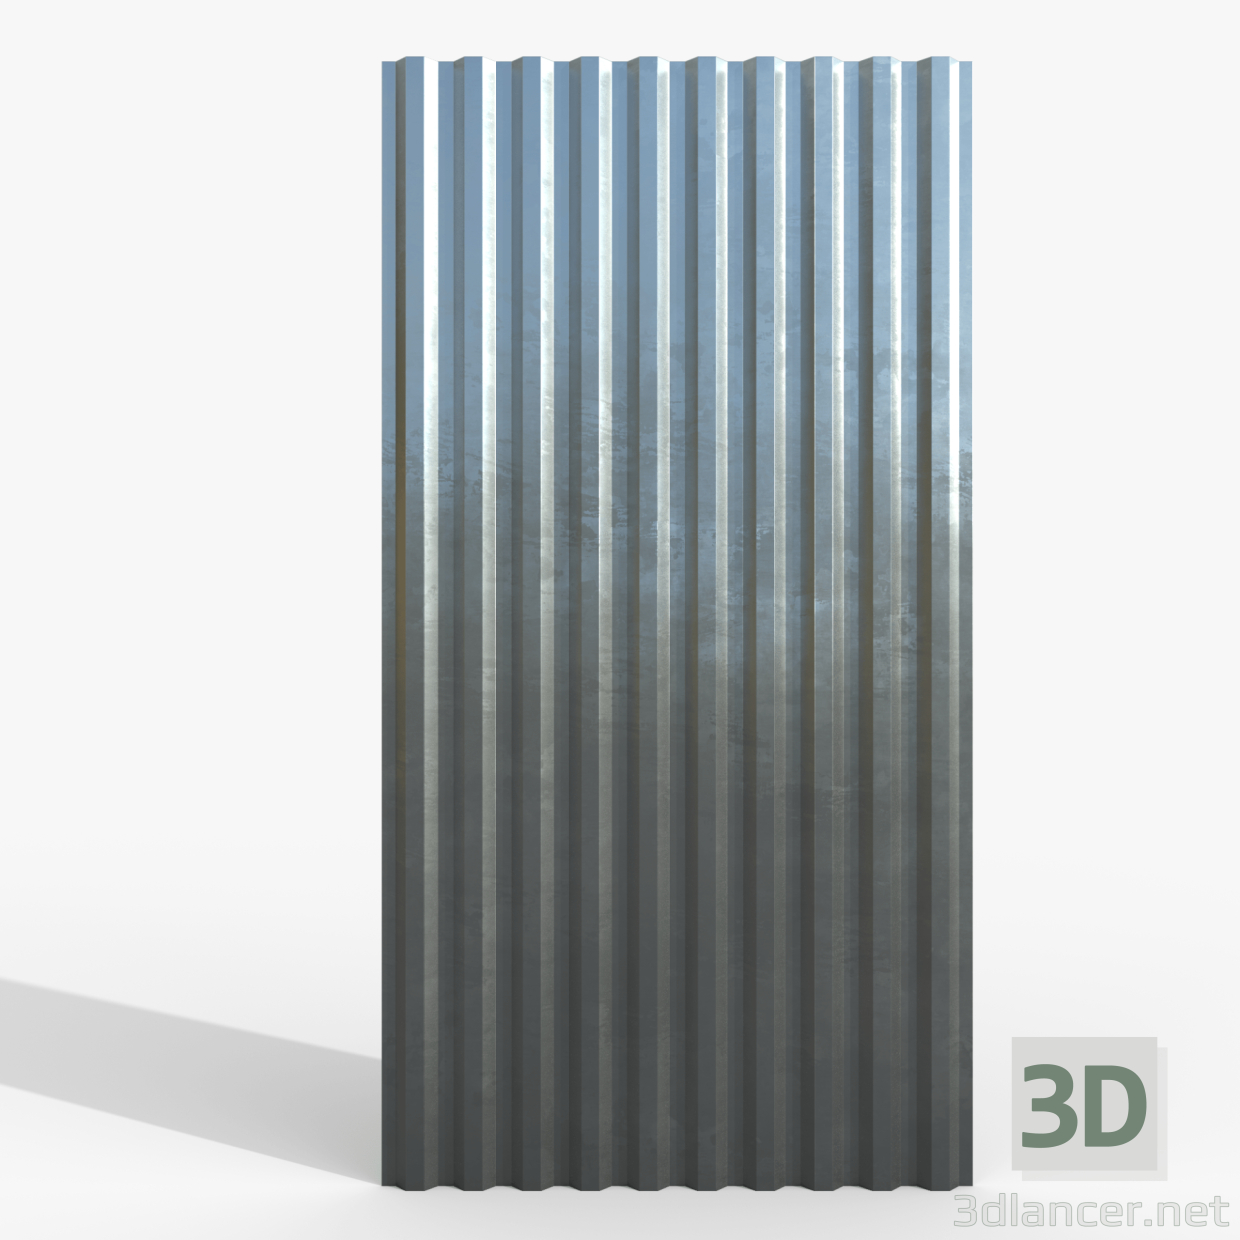 3d Profiled sheet metal model buy - render